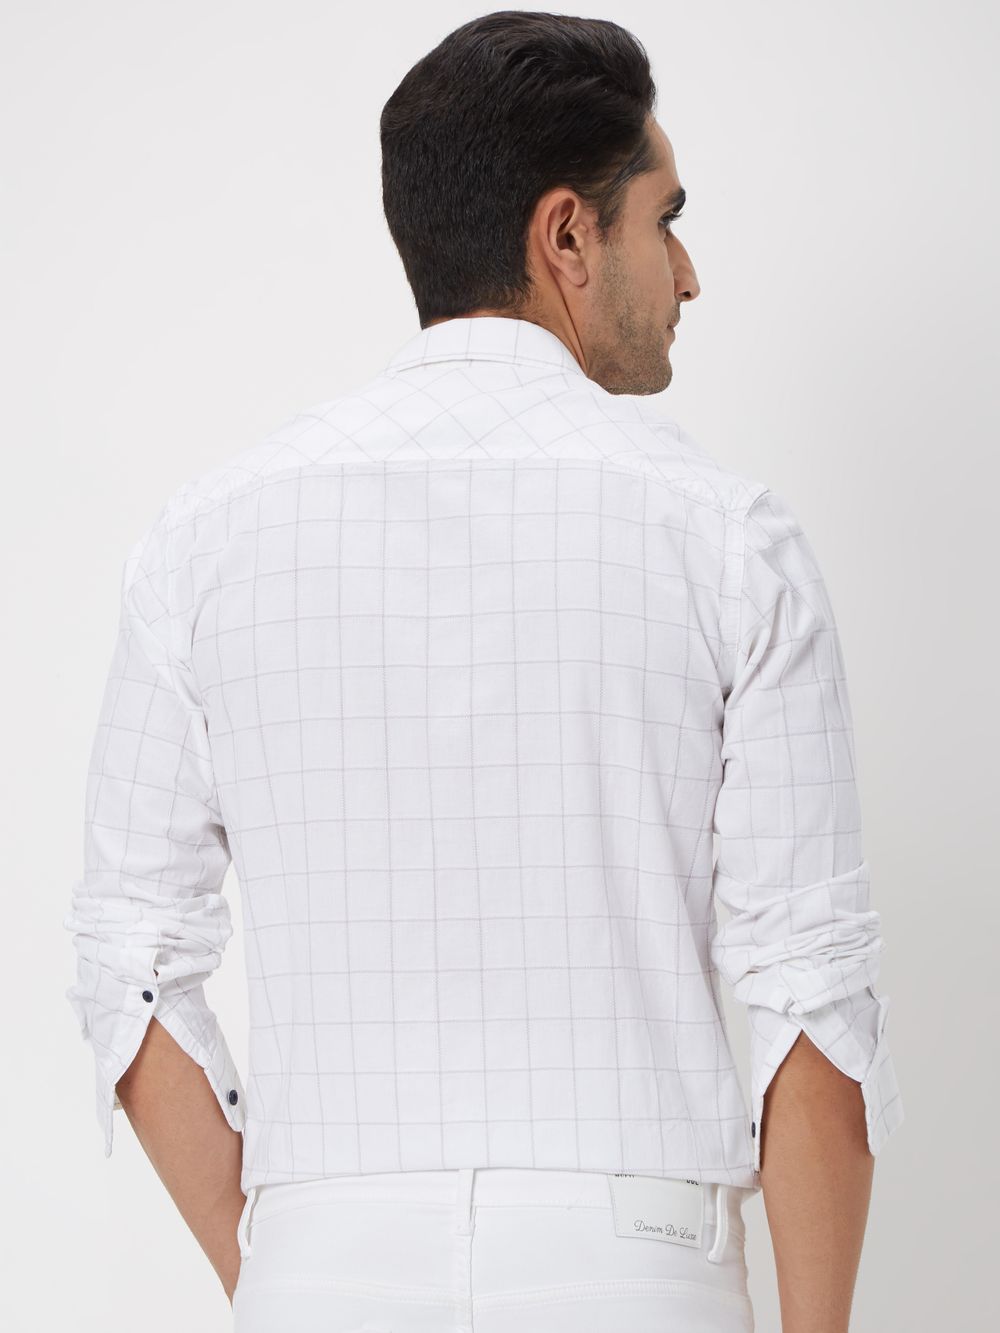 White & Black Windowpane Check Slim Fit Casual Shirt